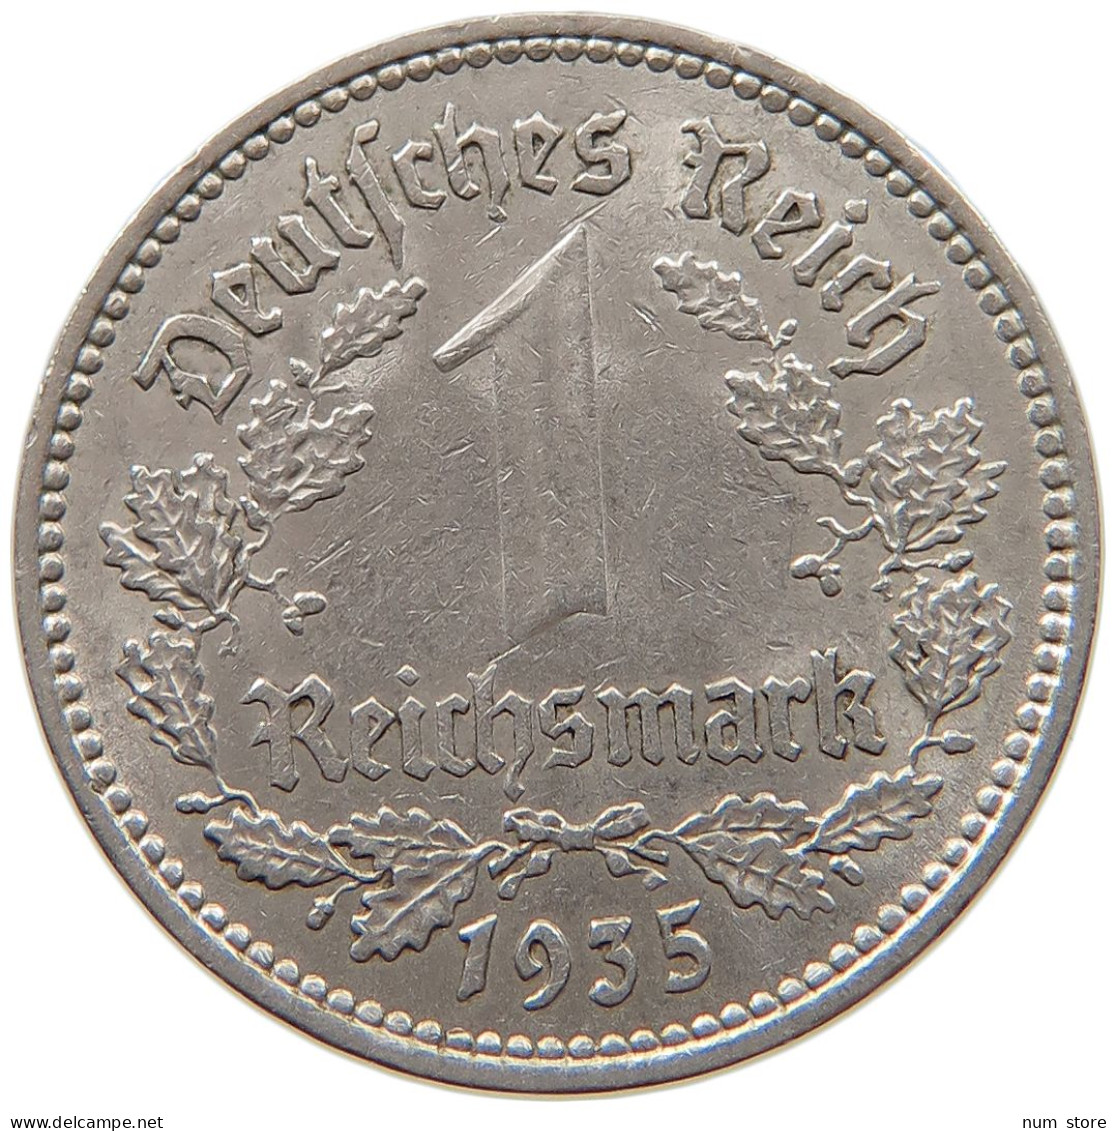 GERMANY 1 MARK 1935 A #c064 0581 - 1 Reichsmark